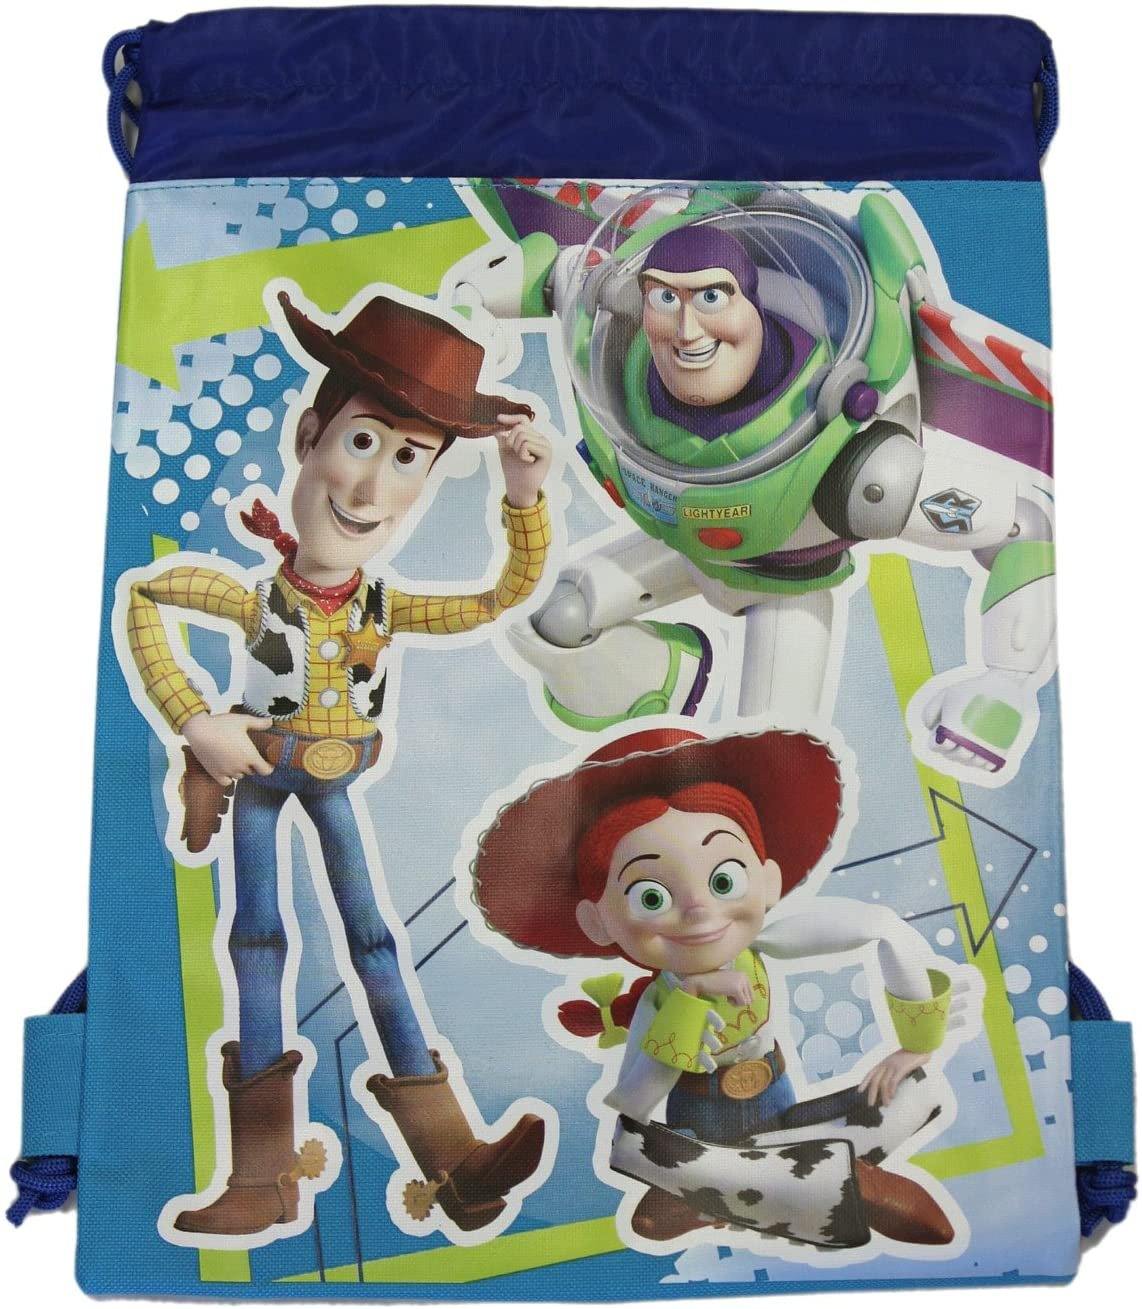 Blue Woody, Buzz, and Jessie Drawstring Bag